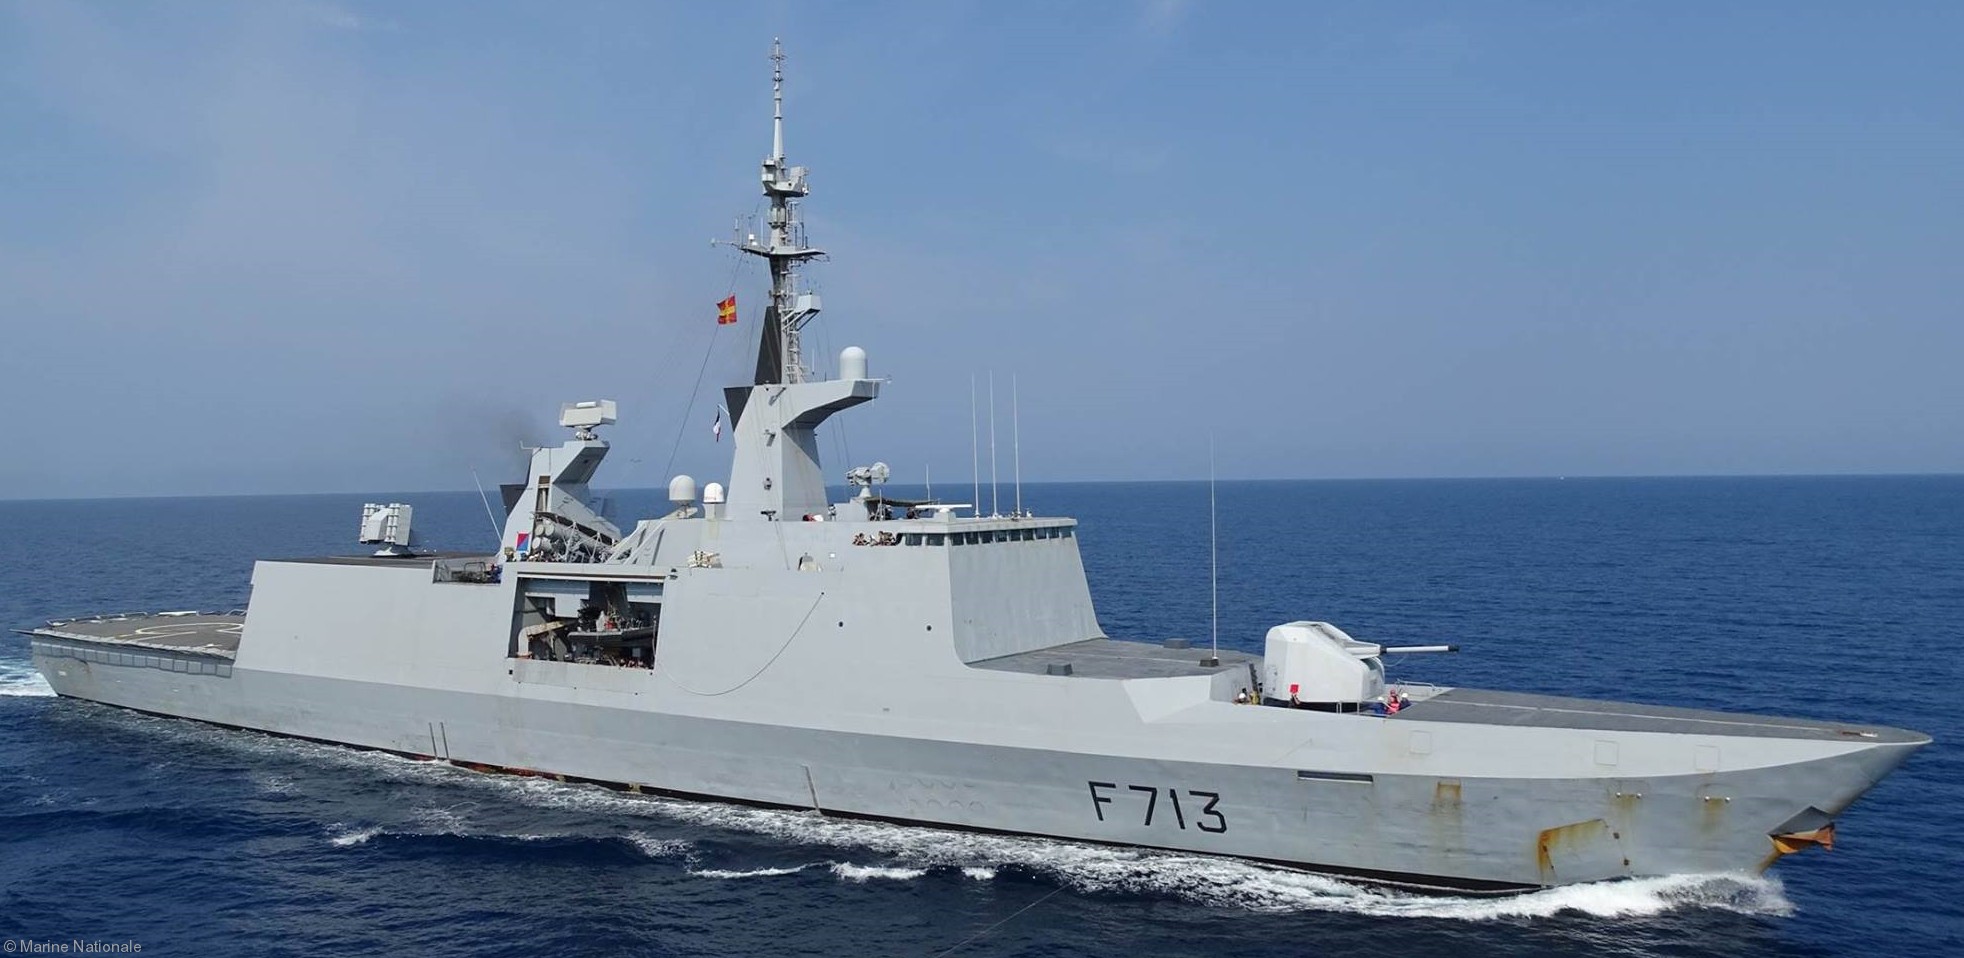 f-713 fs aconit la fayette class frigate flf french navy marine nationale 06